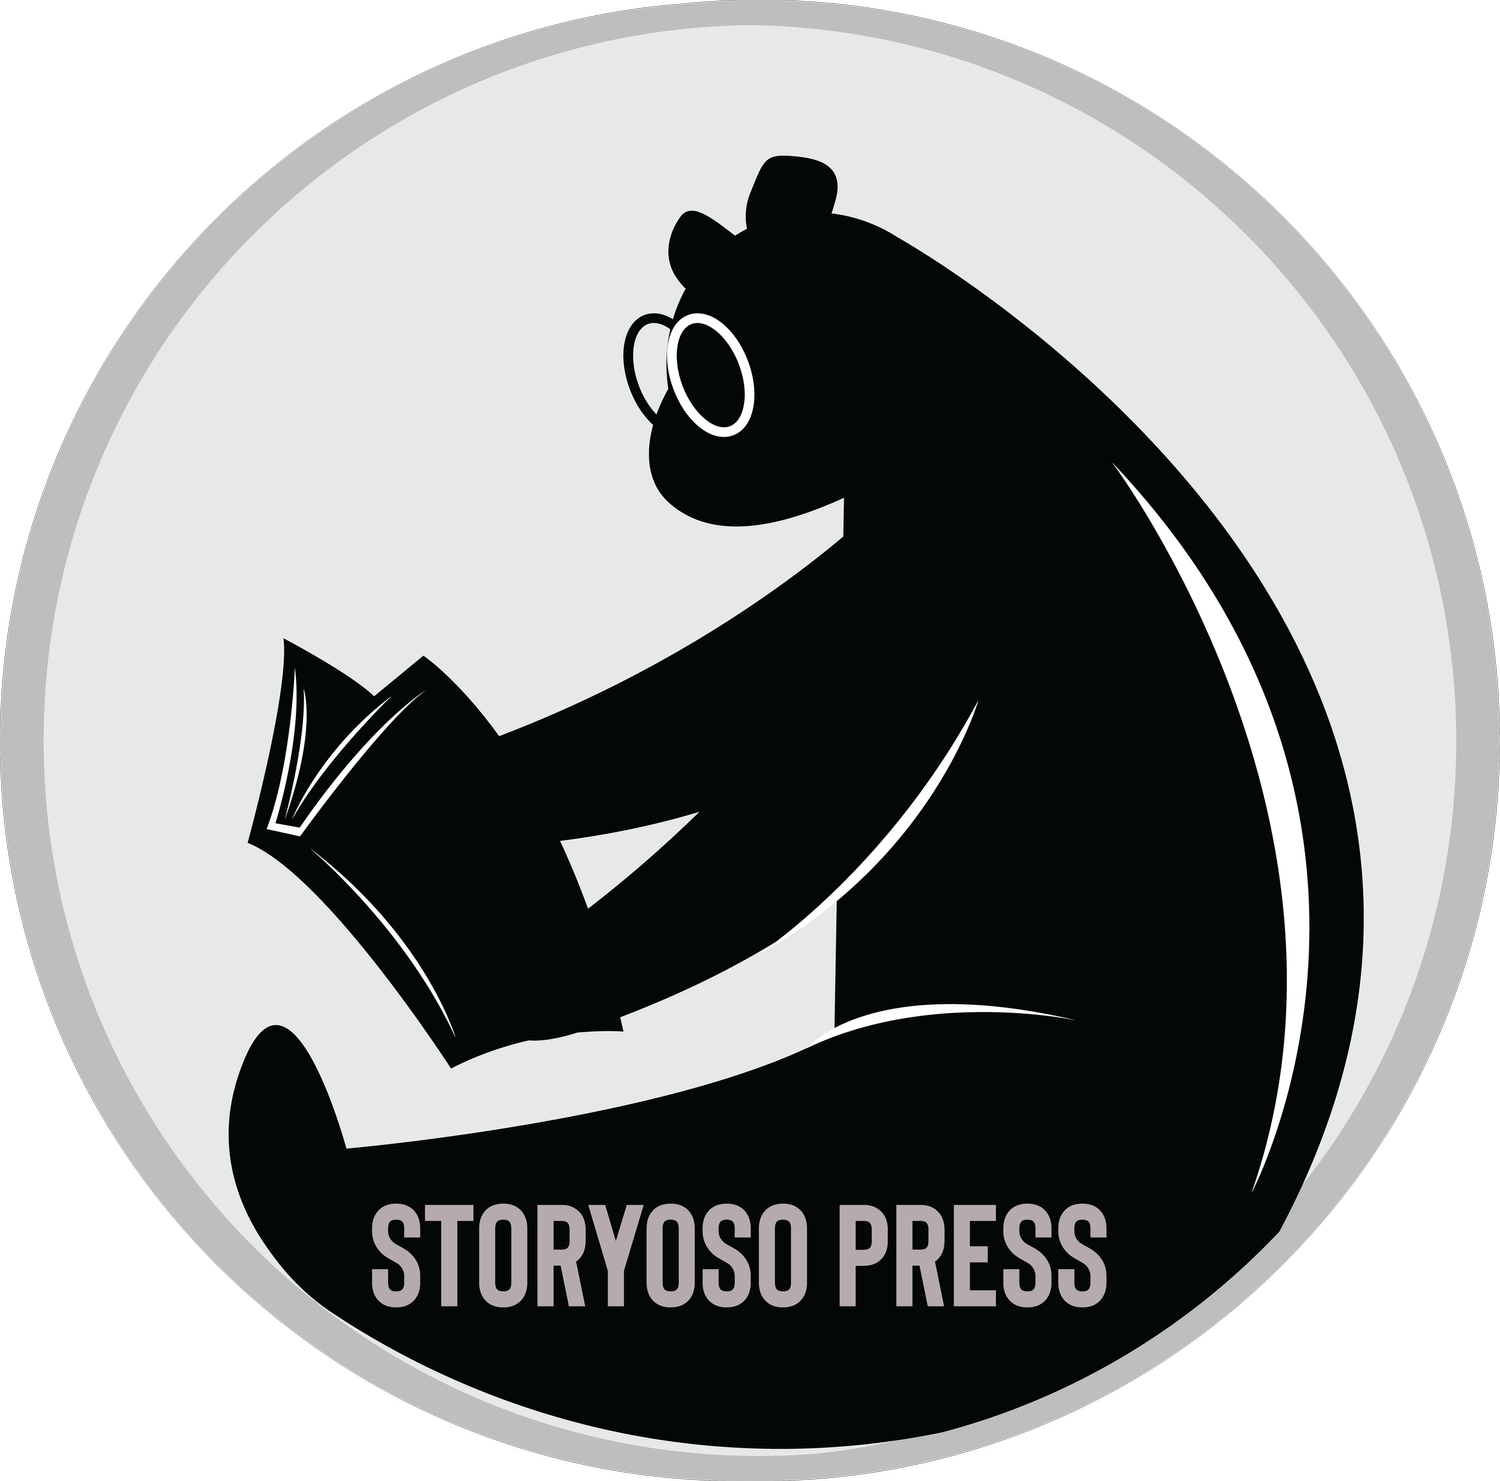 StoryOso Press